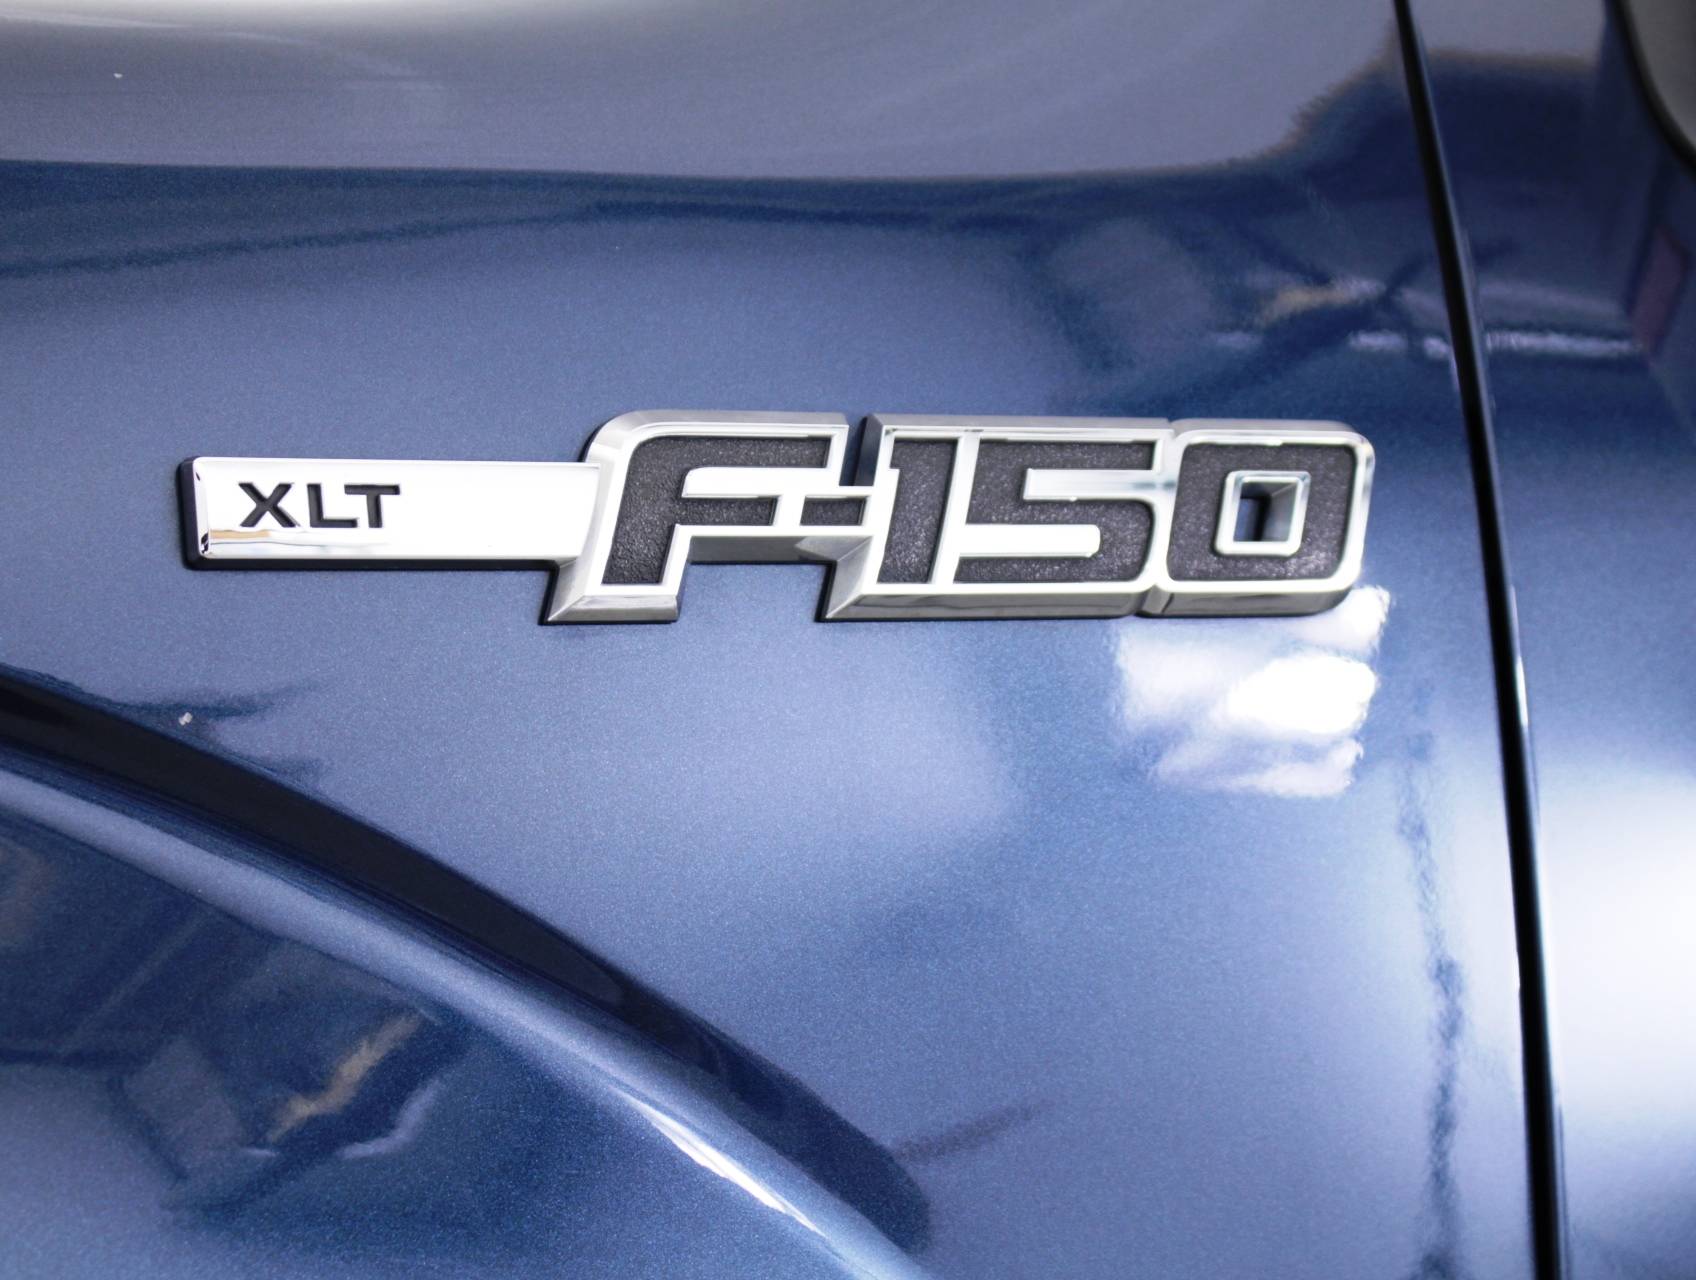 Florida Fine Cars - Used FORD F 150 2014 HOLLYWOOD Xlt Supercrew 4x4